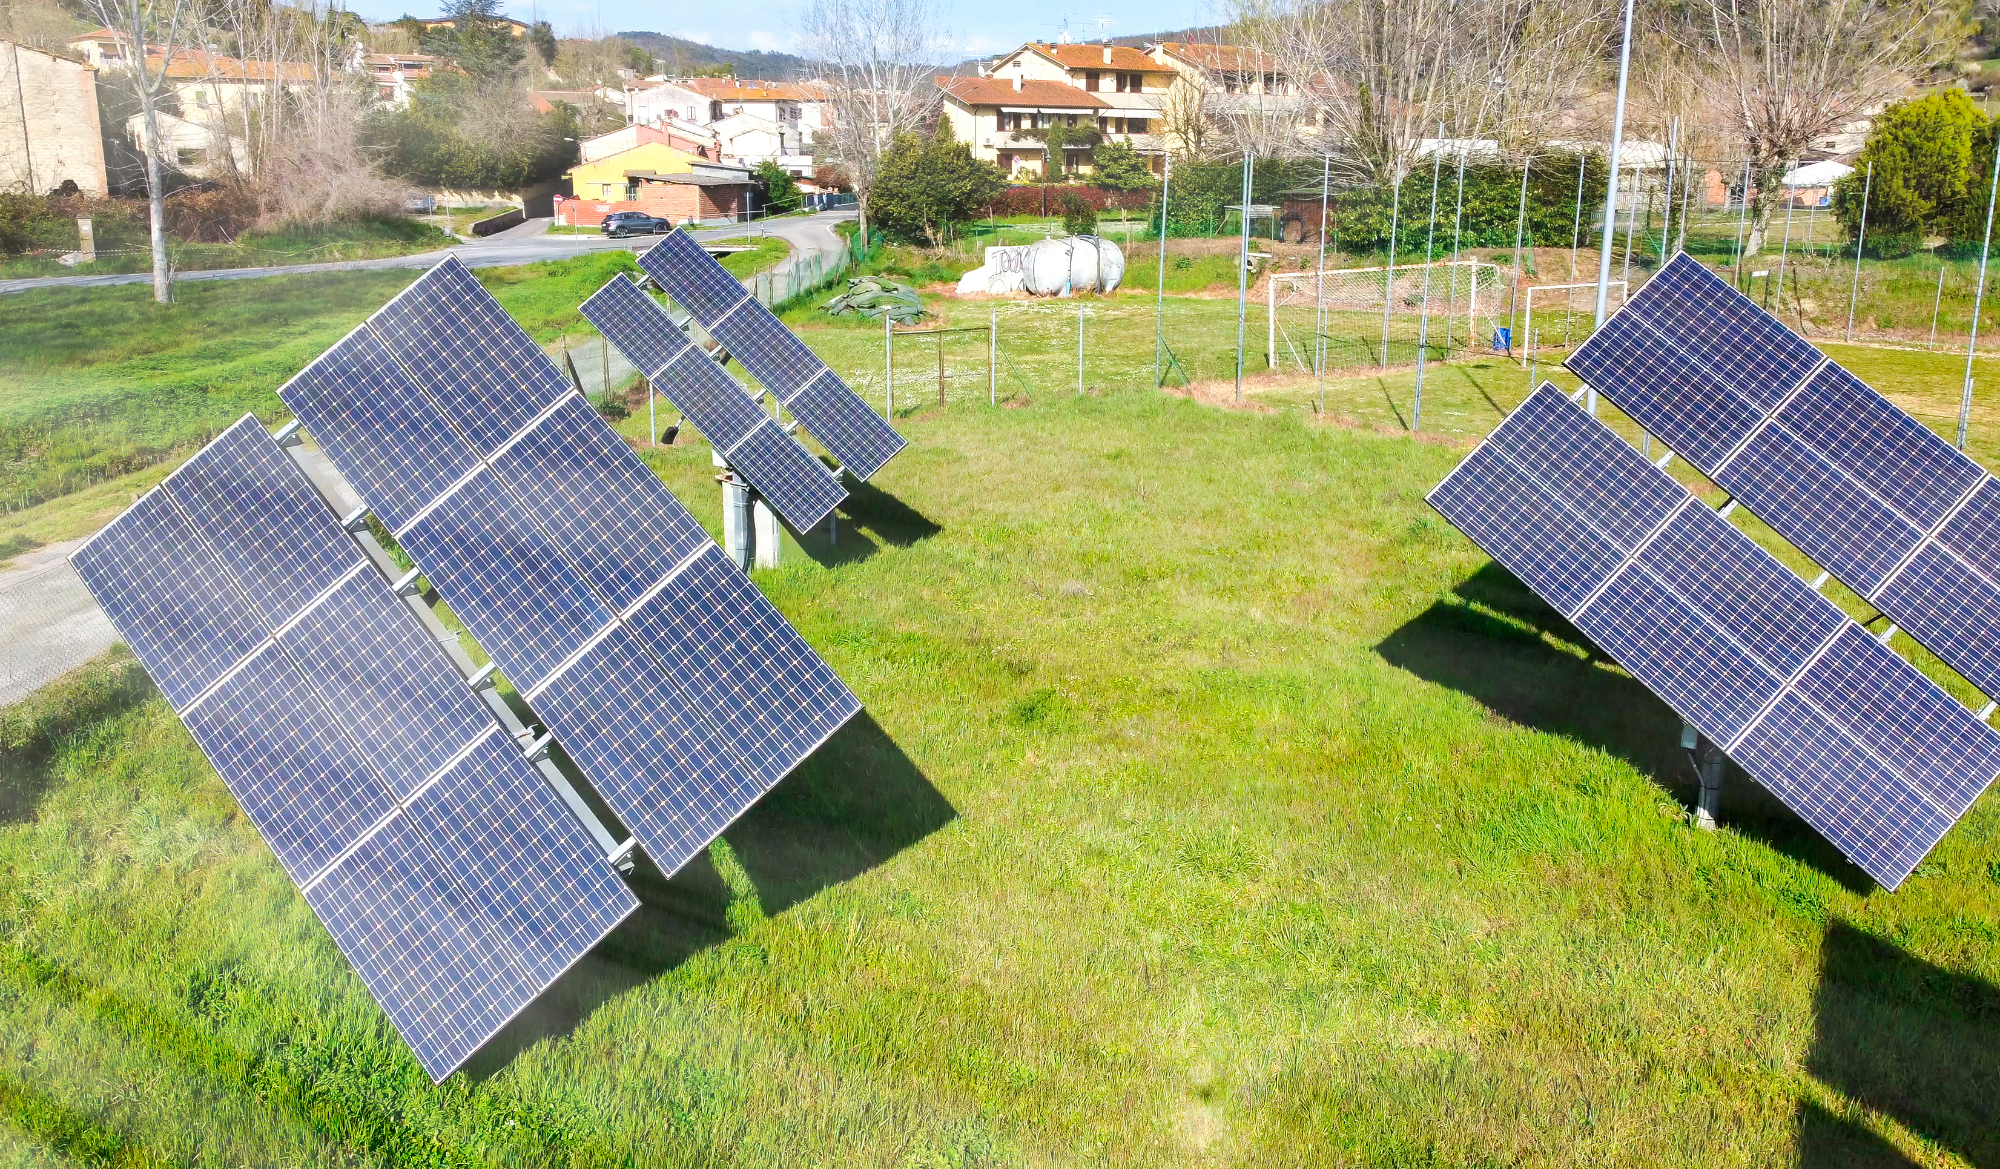 Solarni paneli so dobra investicija za prihodnost